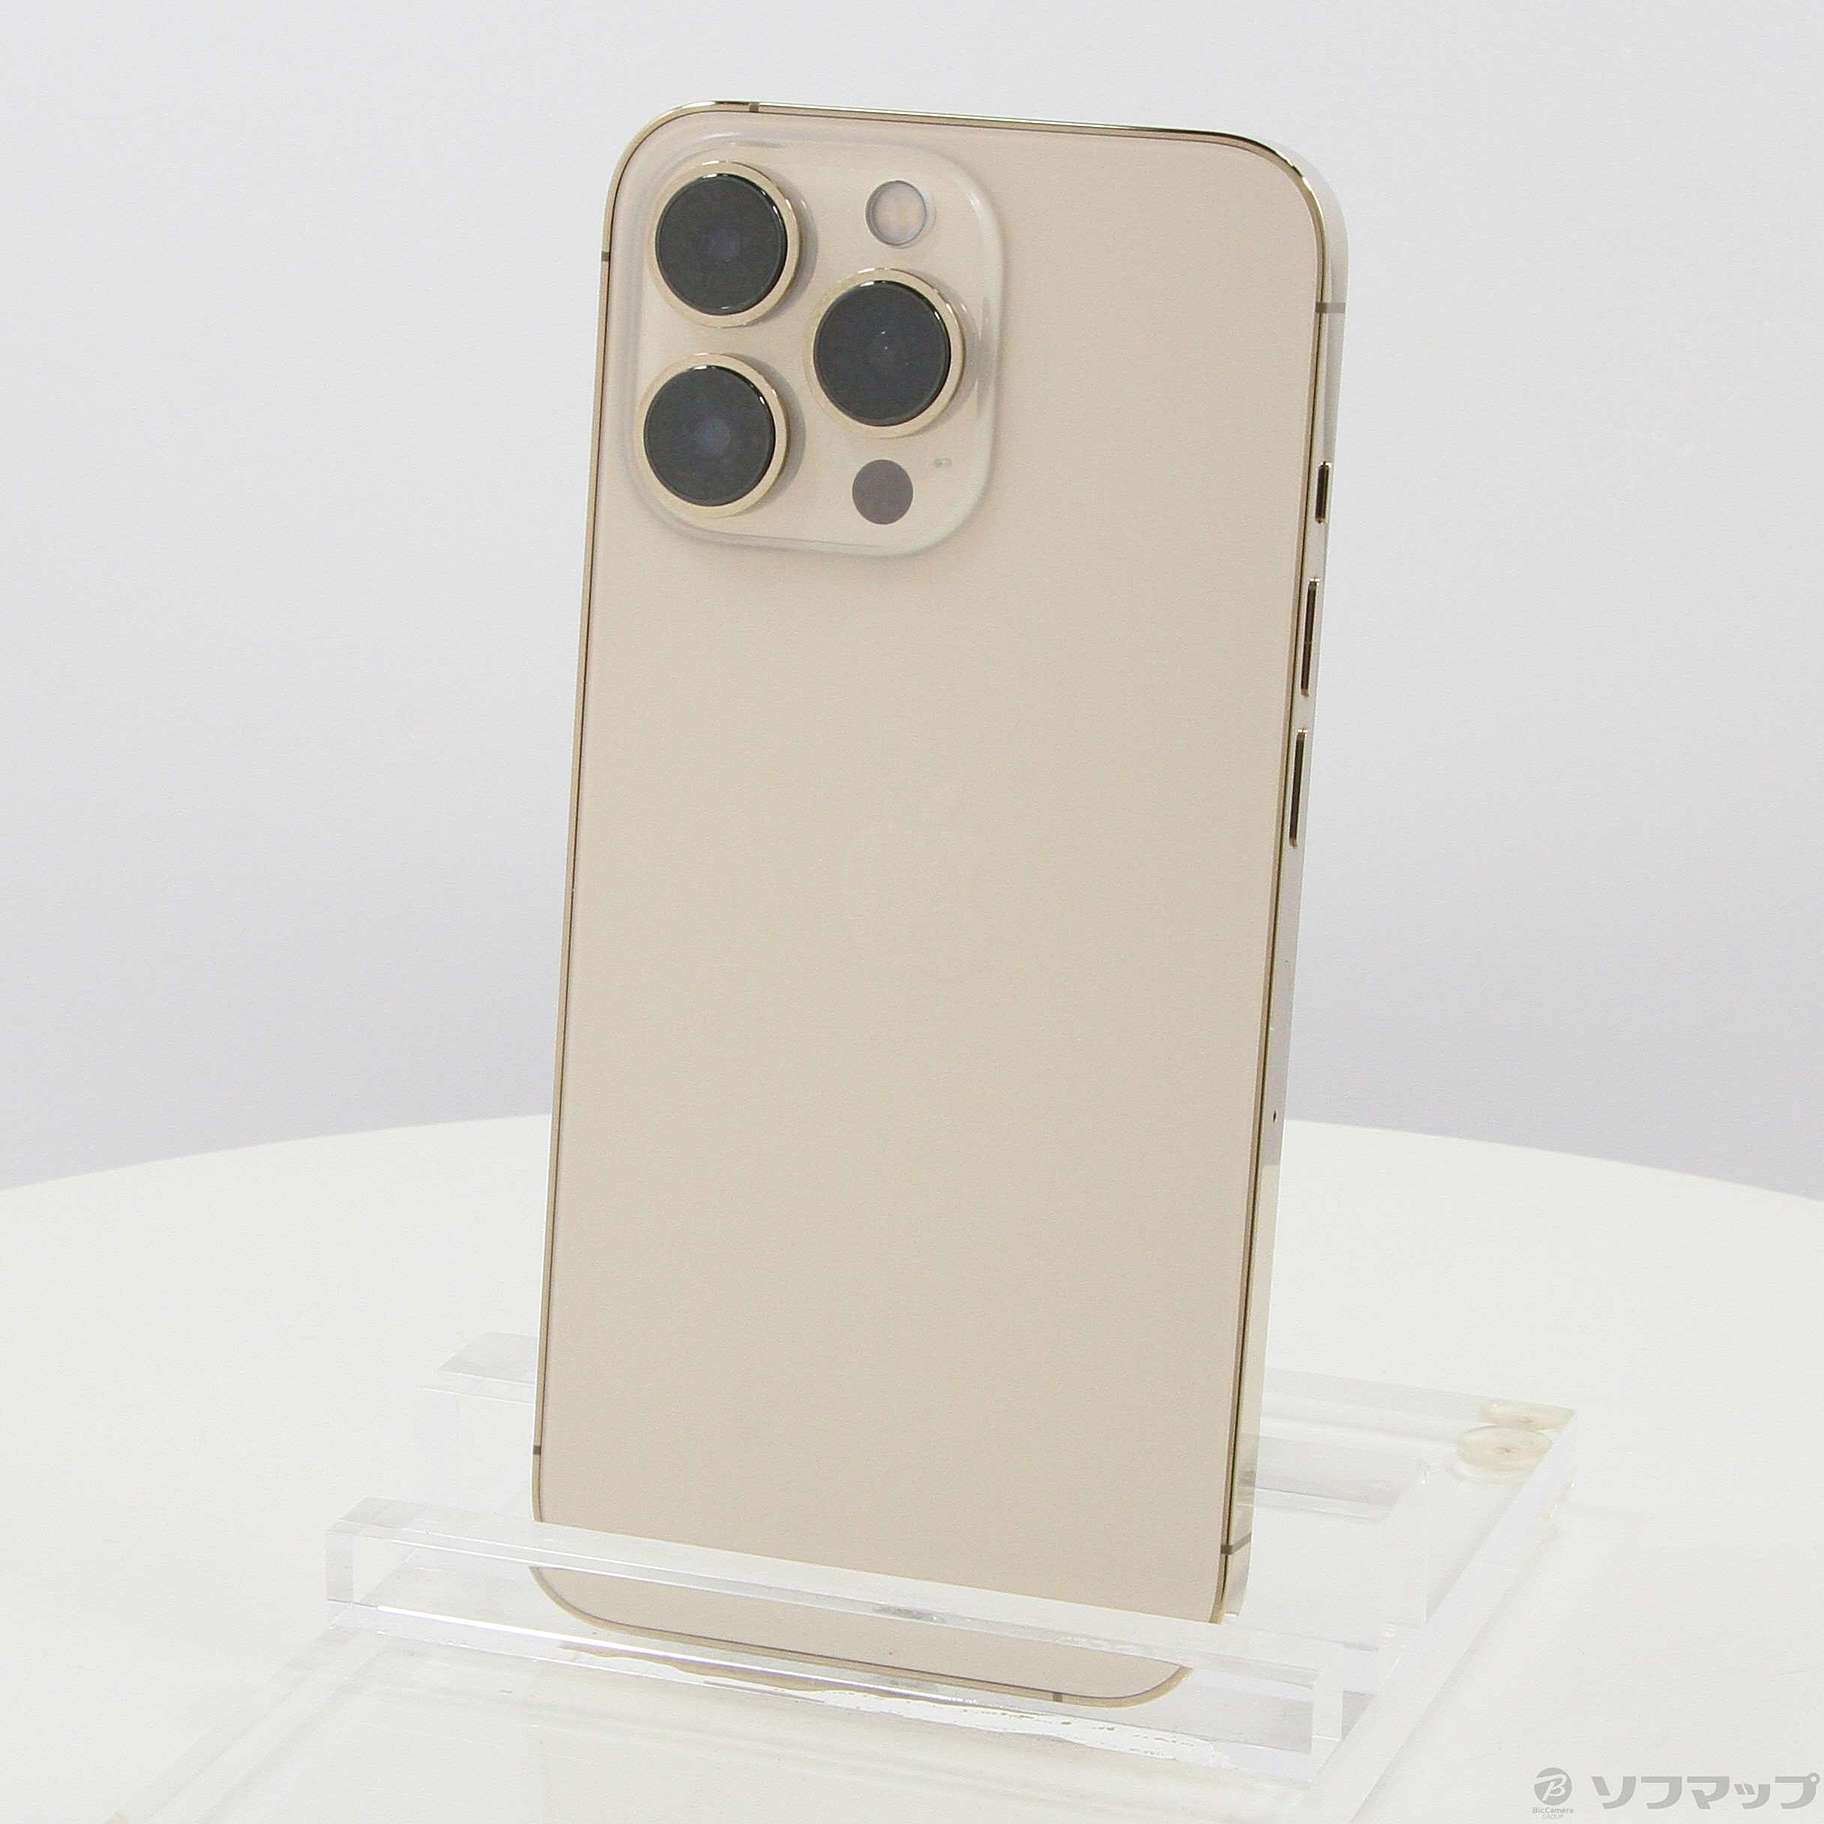 【最終価格】apple iPhone 13 pro gold 256GB